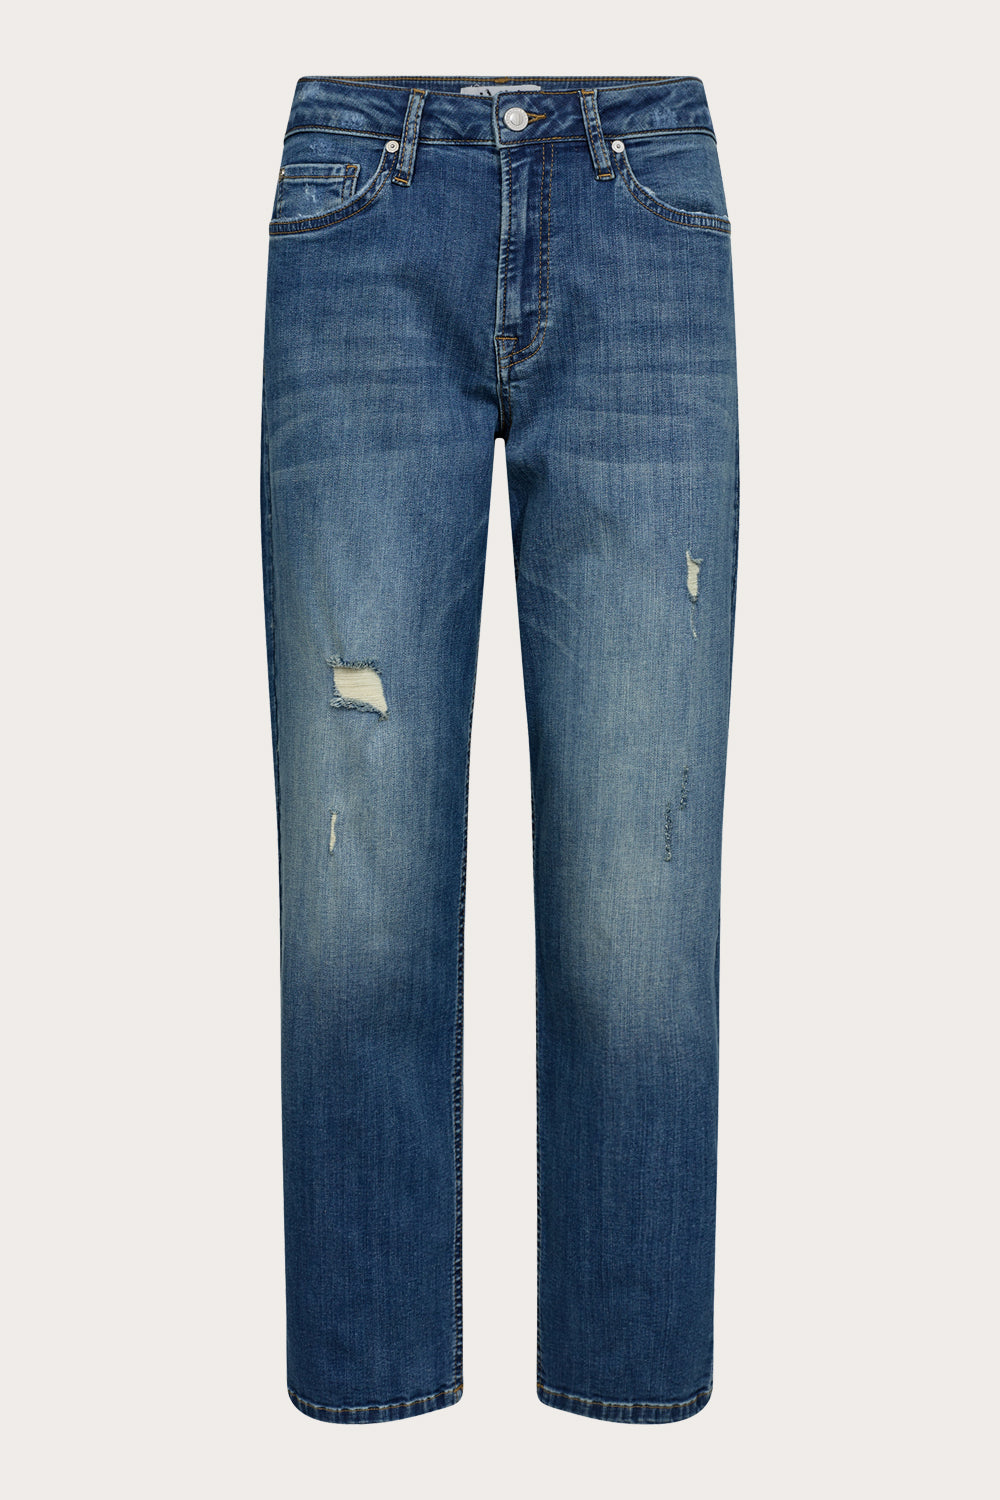 IVY Copenhagen IVY-Tonya Jeans Wash Santa Cruz Dist. Jeans & Pants